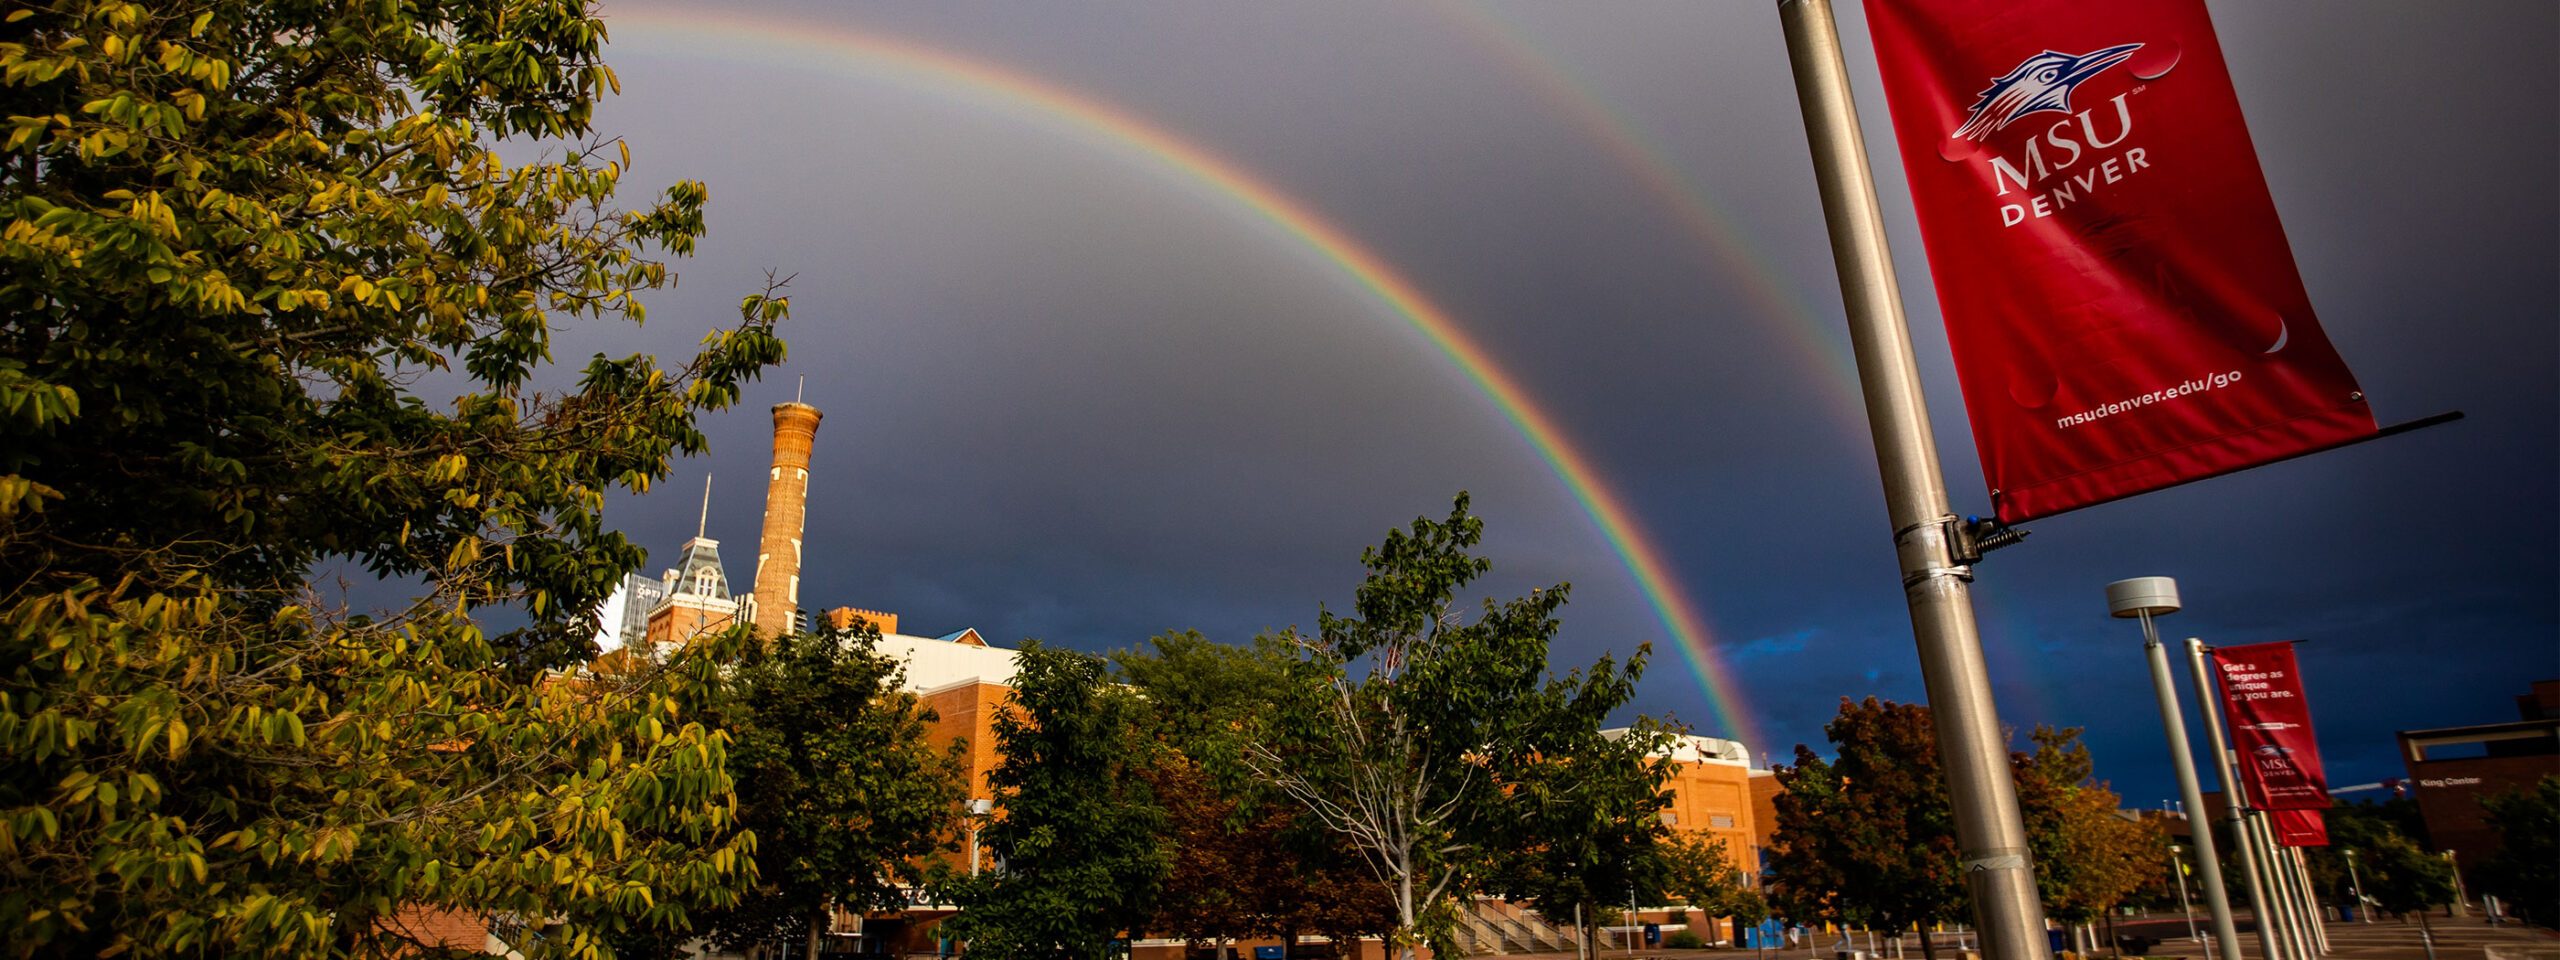 Rainbows over the Tivoli building on the MSU Denver campus.